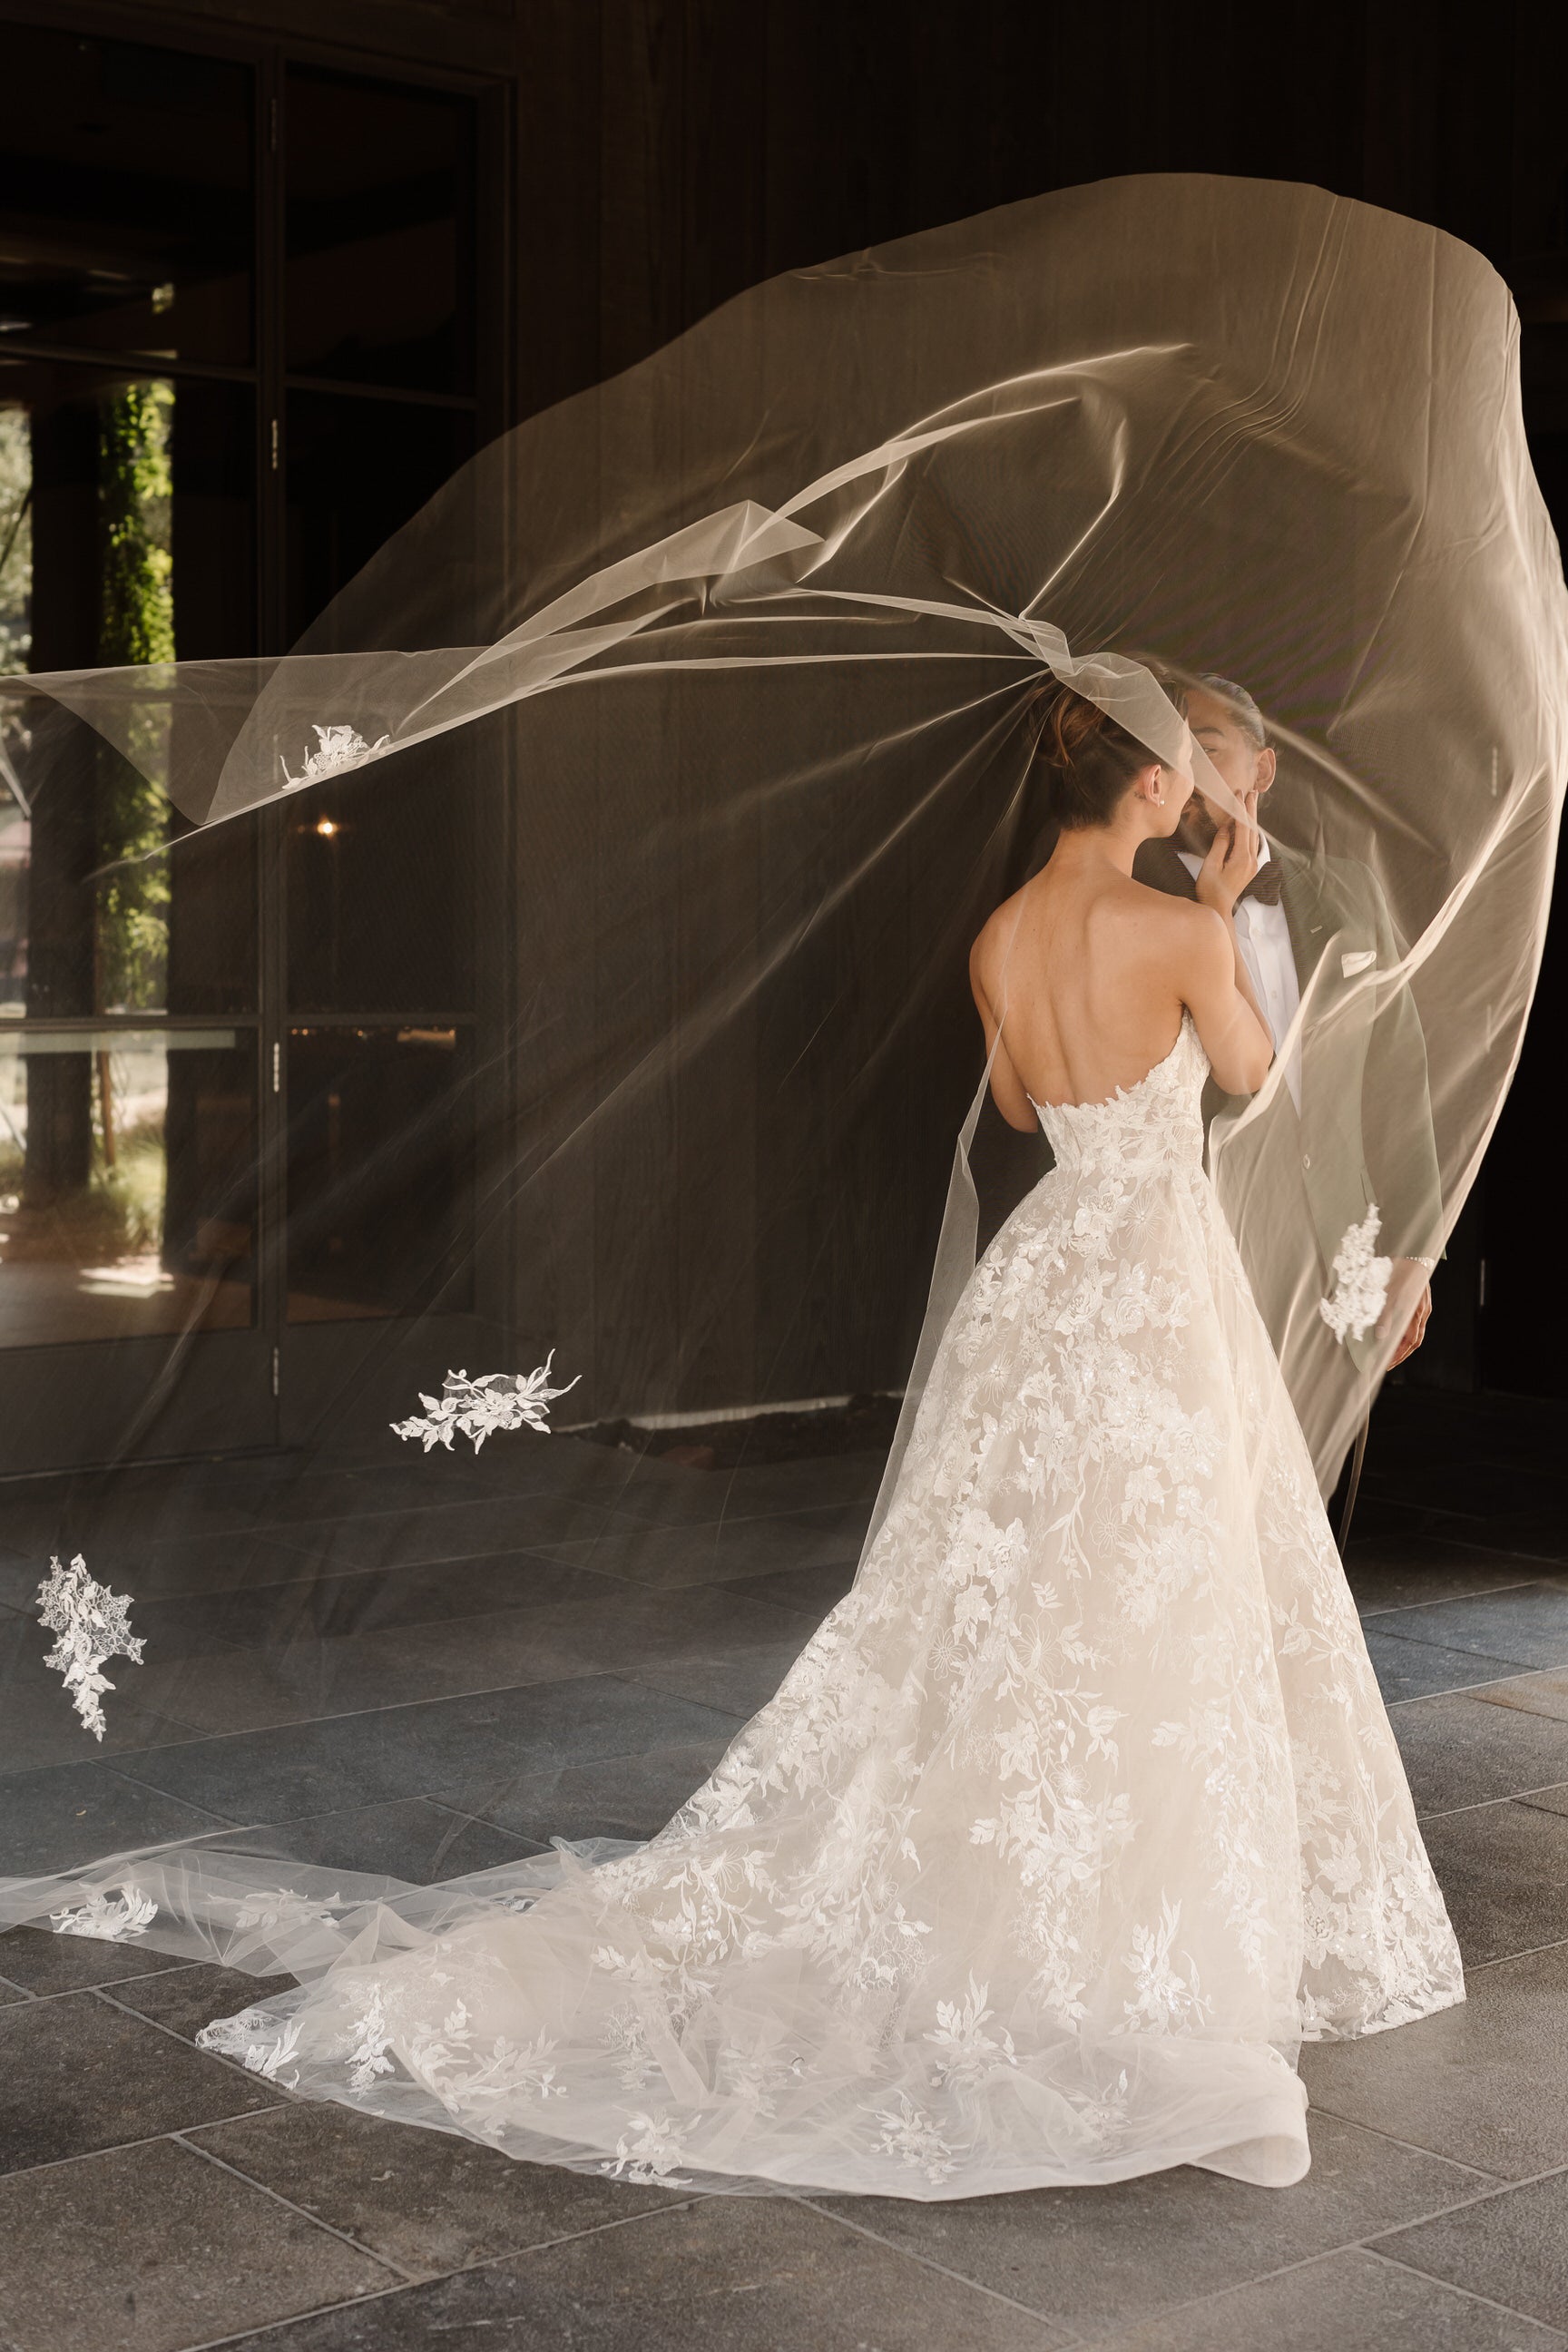 Swirl Scallop Lace Fingertip Wedding Veil, White Ivory Bridal Veil